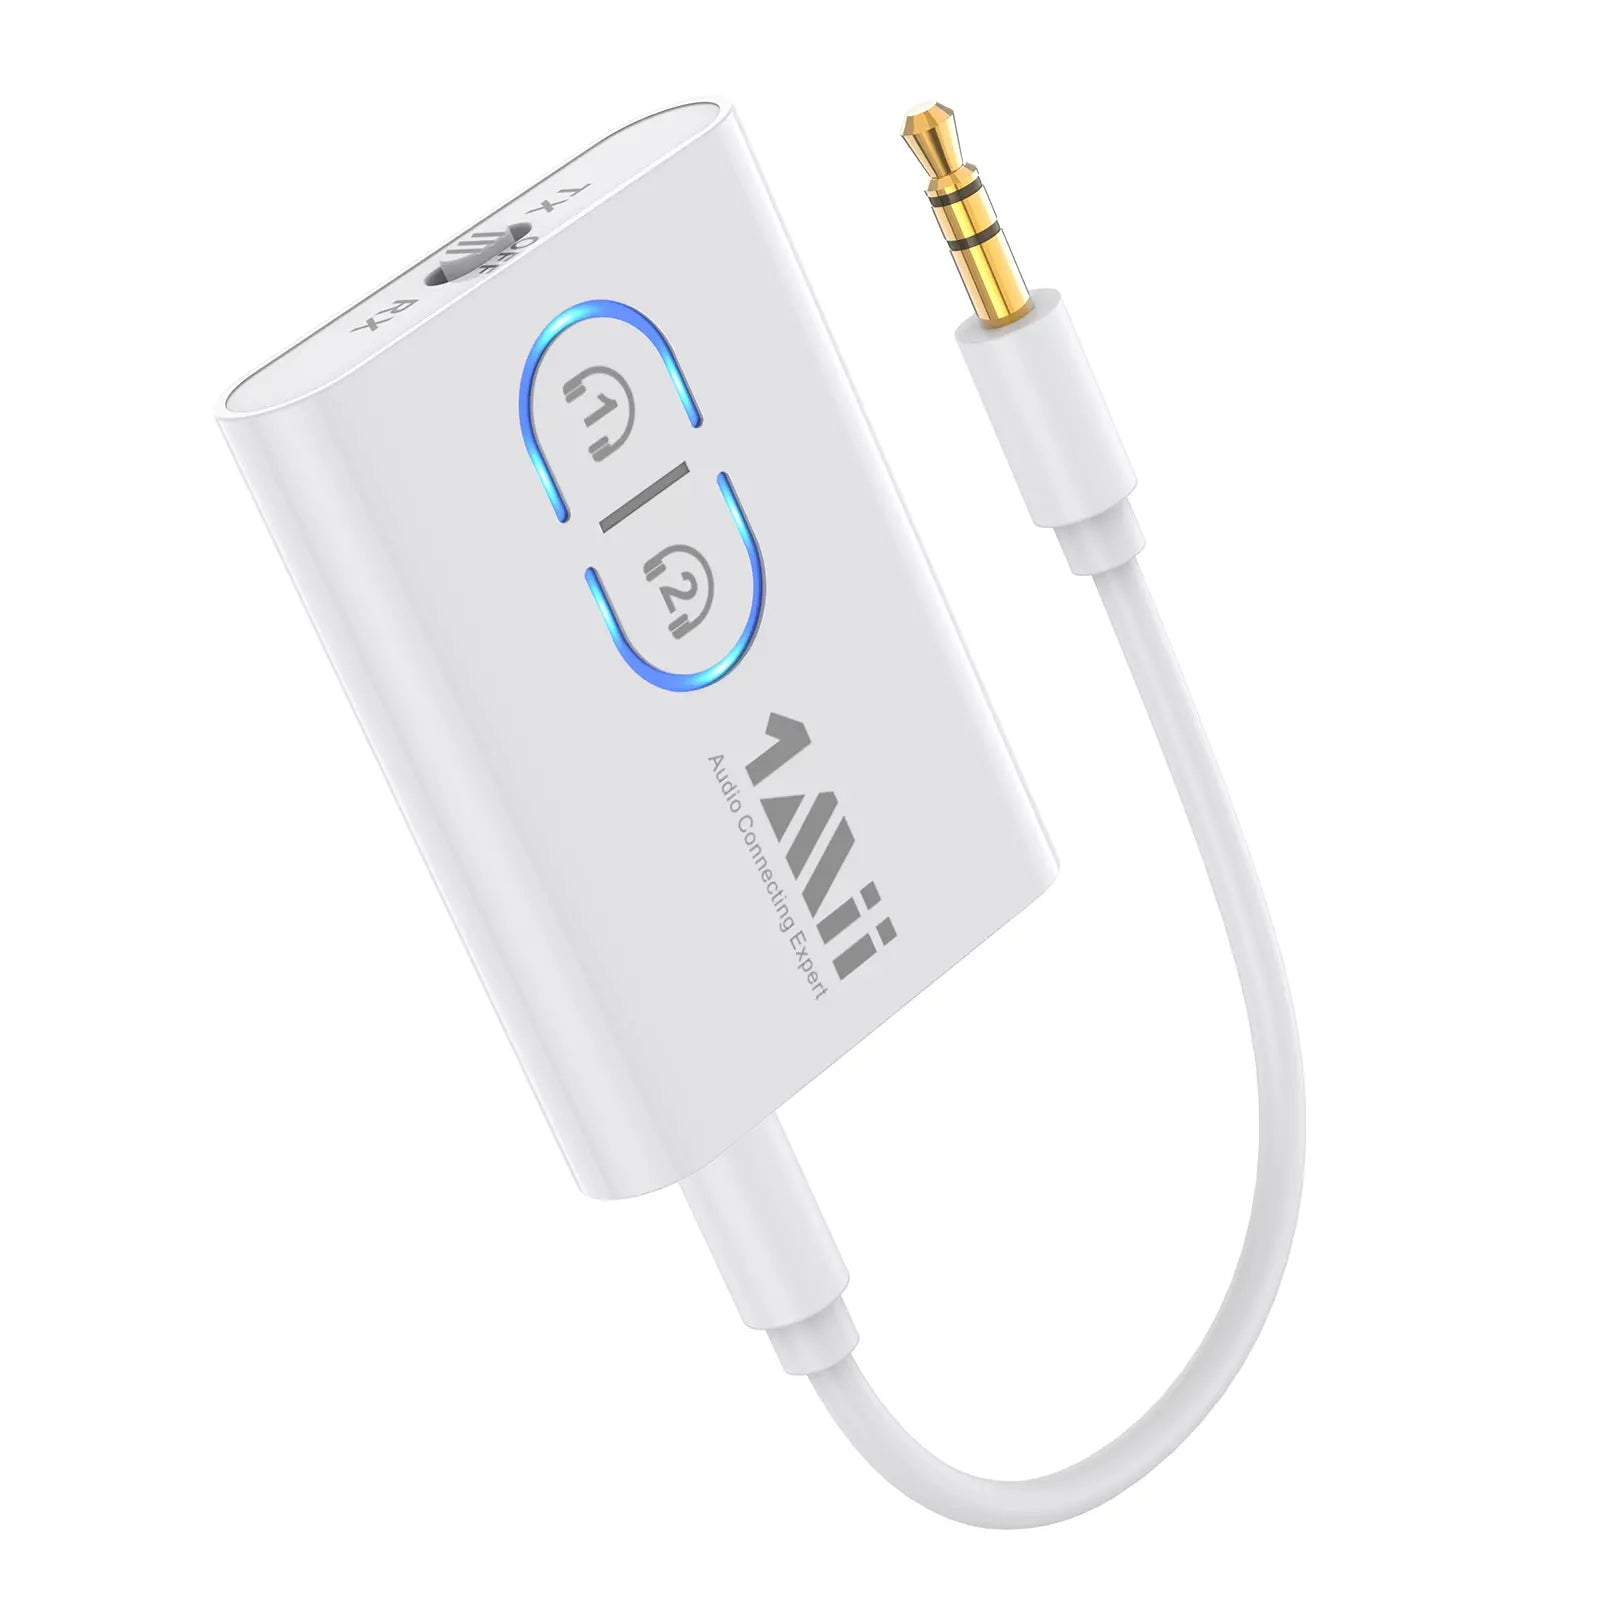 TV/Car 2-in-1 Bluetooth 5.2 Transmitter Receiver, Adaptive, Mini Portable  Wireless Bluetooth Adapter with 3.5mm AUX Jack, Bluetooth Transmitter  Device